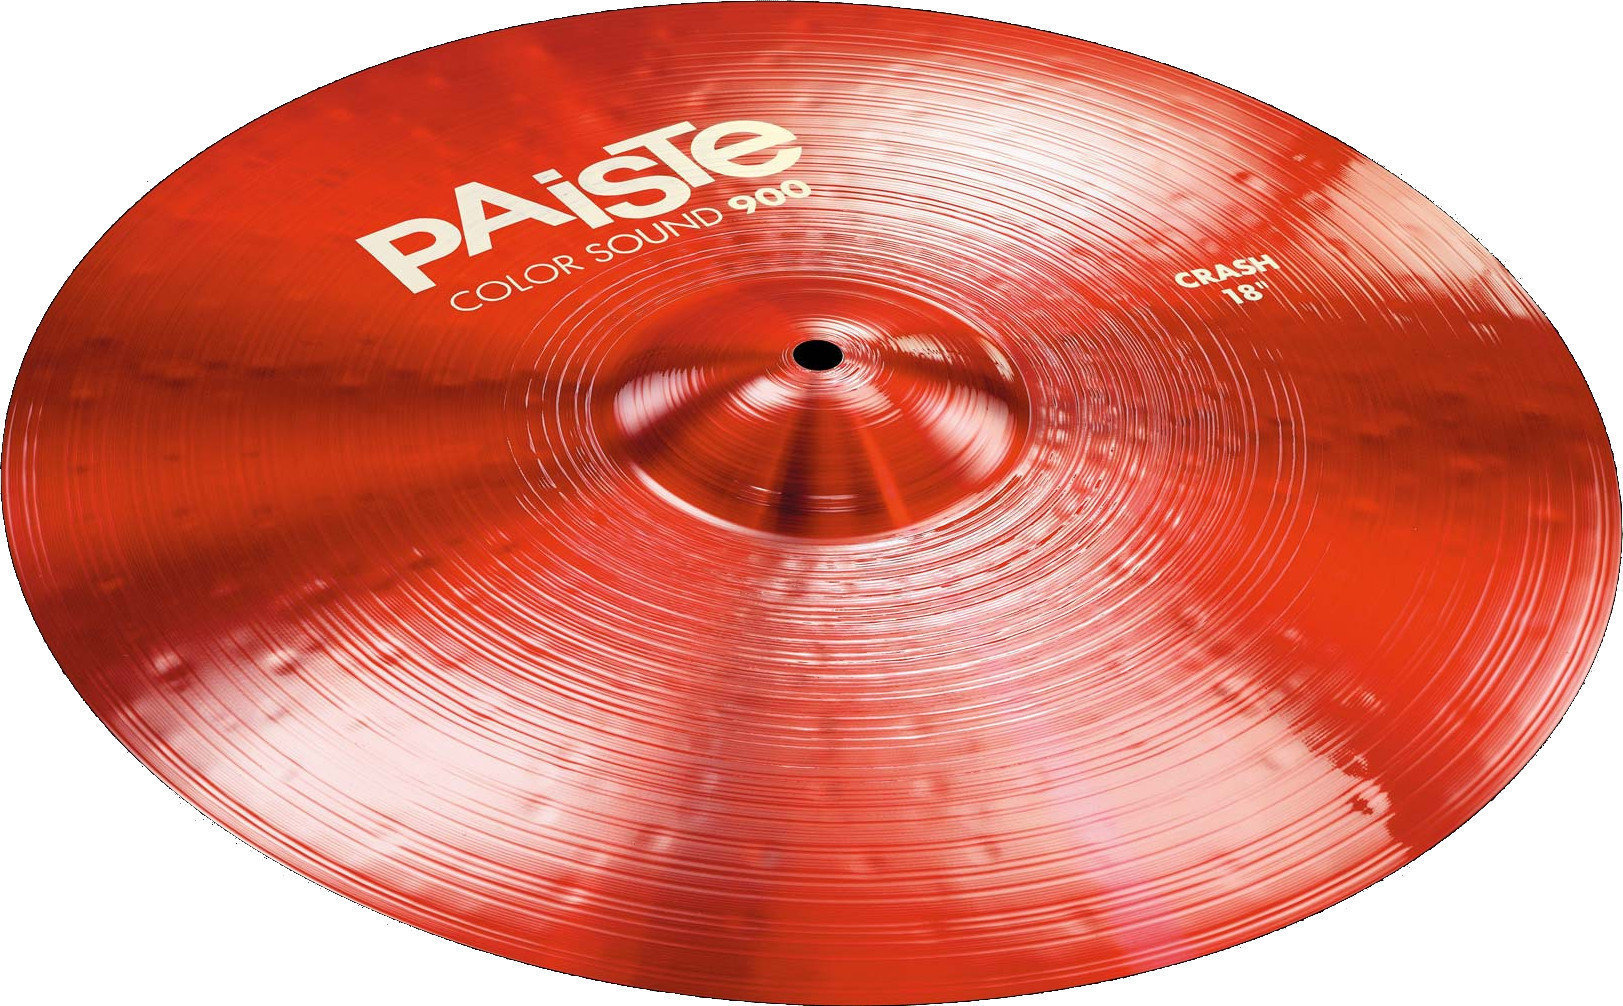 Crash Cymbal Paiste Color Sound 900 Crash Cymbal 16" Red